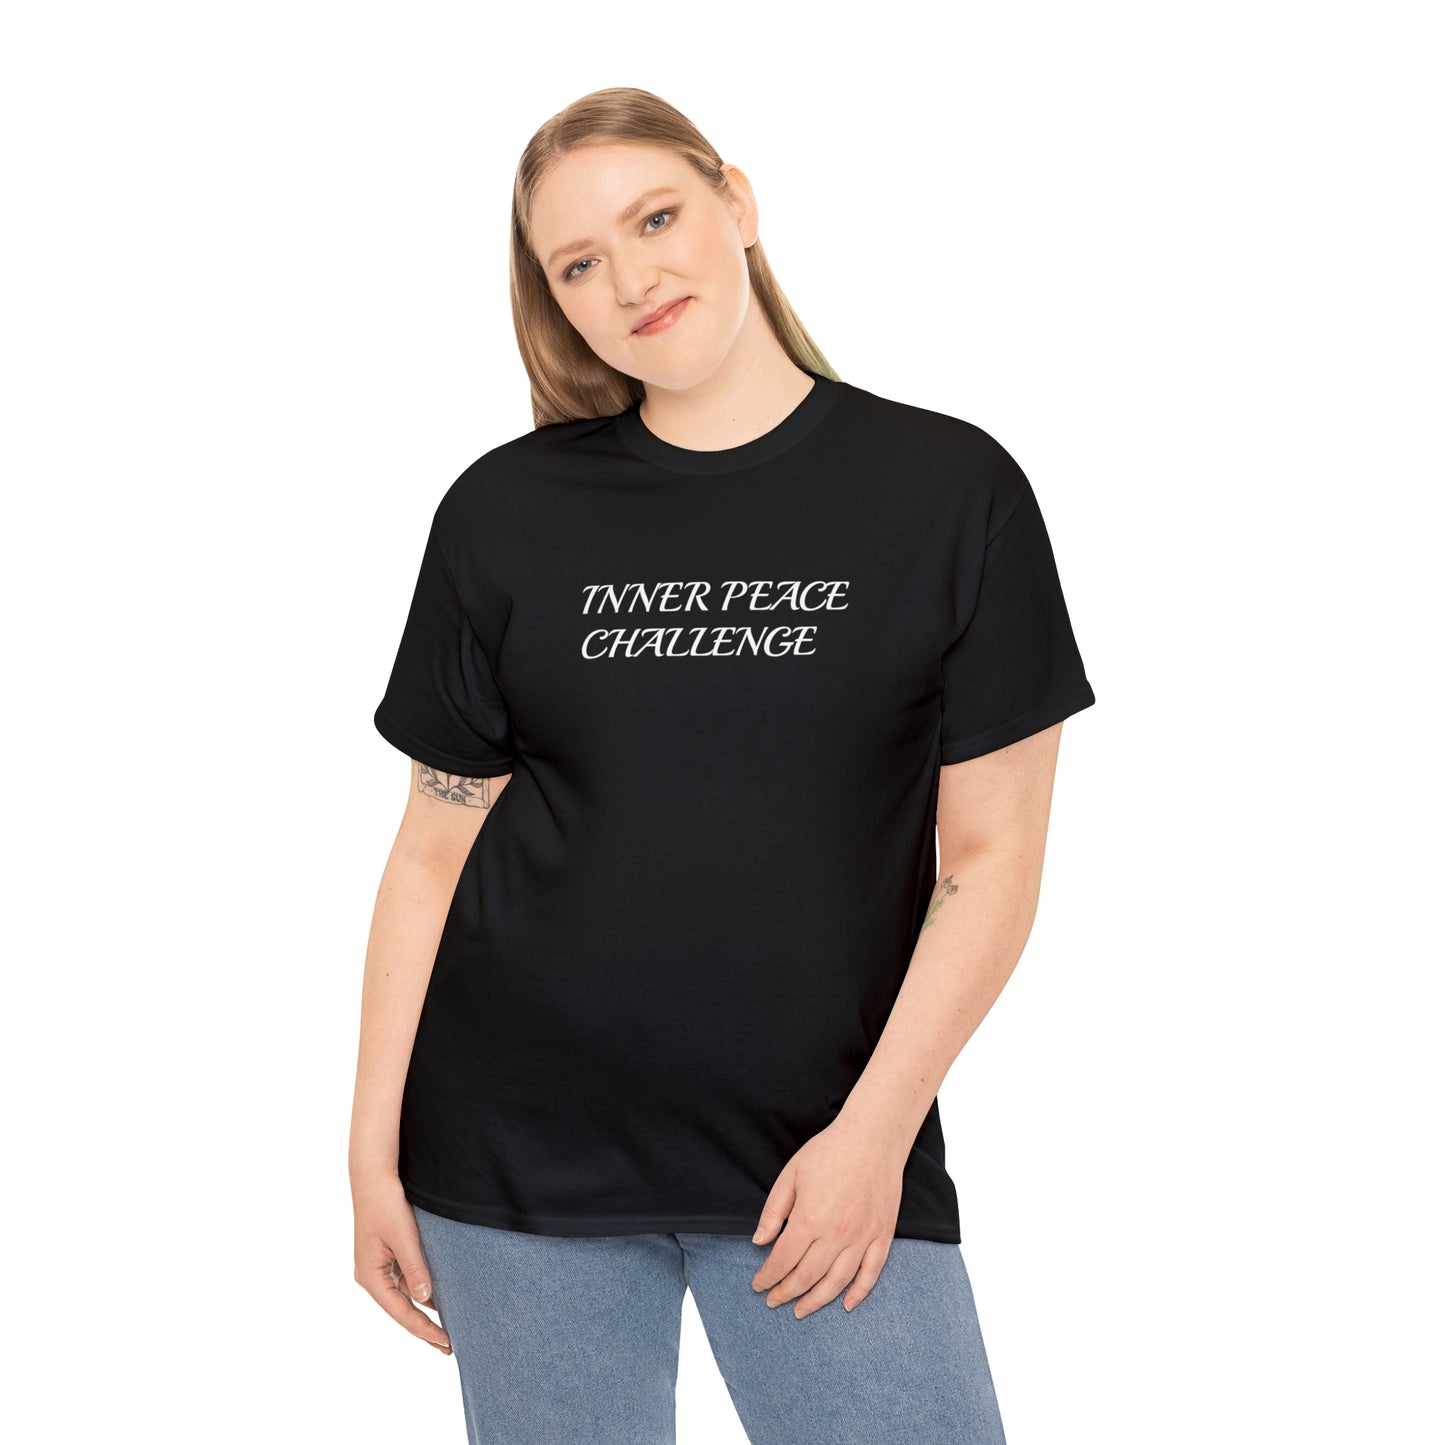 Inner peace challenge shirt